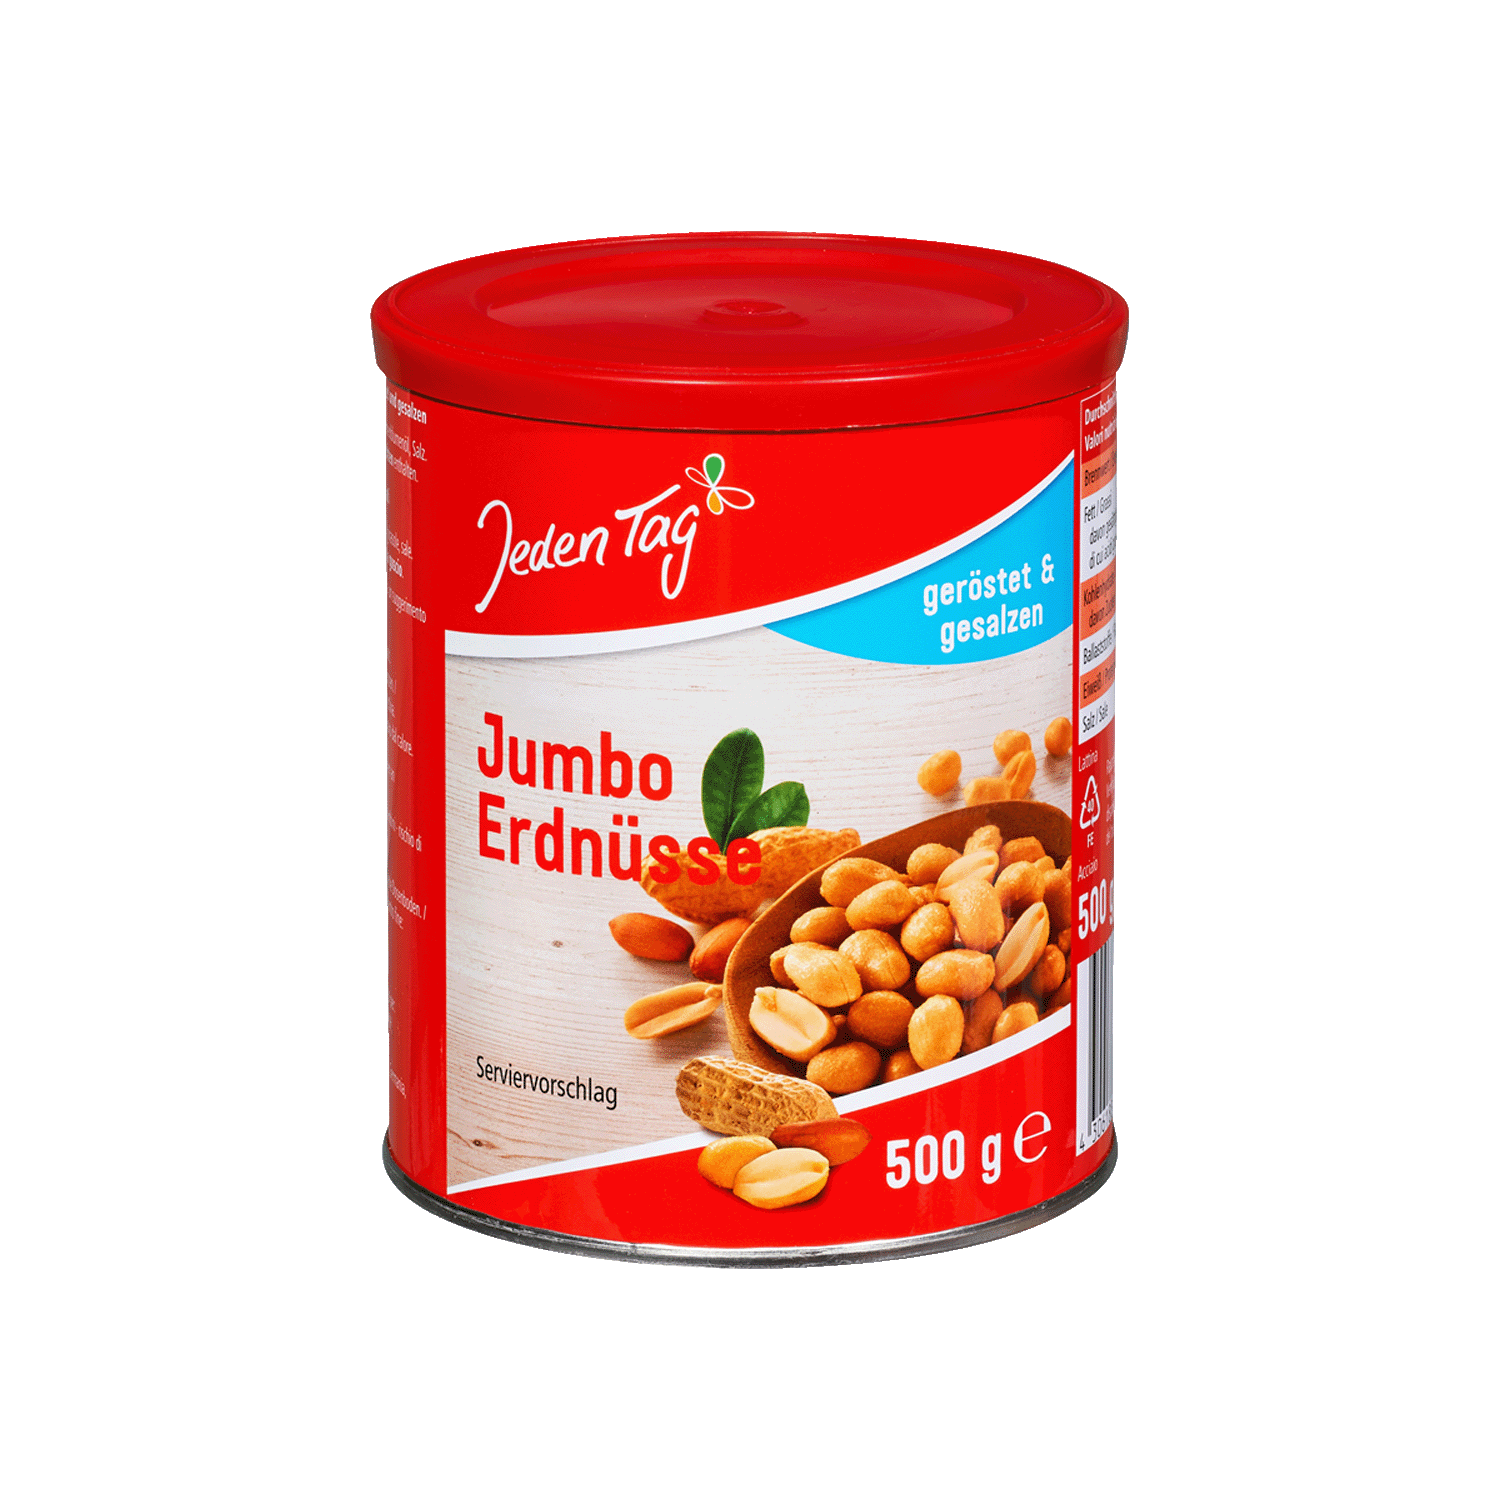 Jumbo Erdnüsse geröstet & gesalzen, 500g